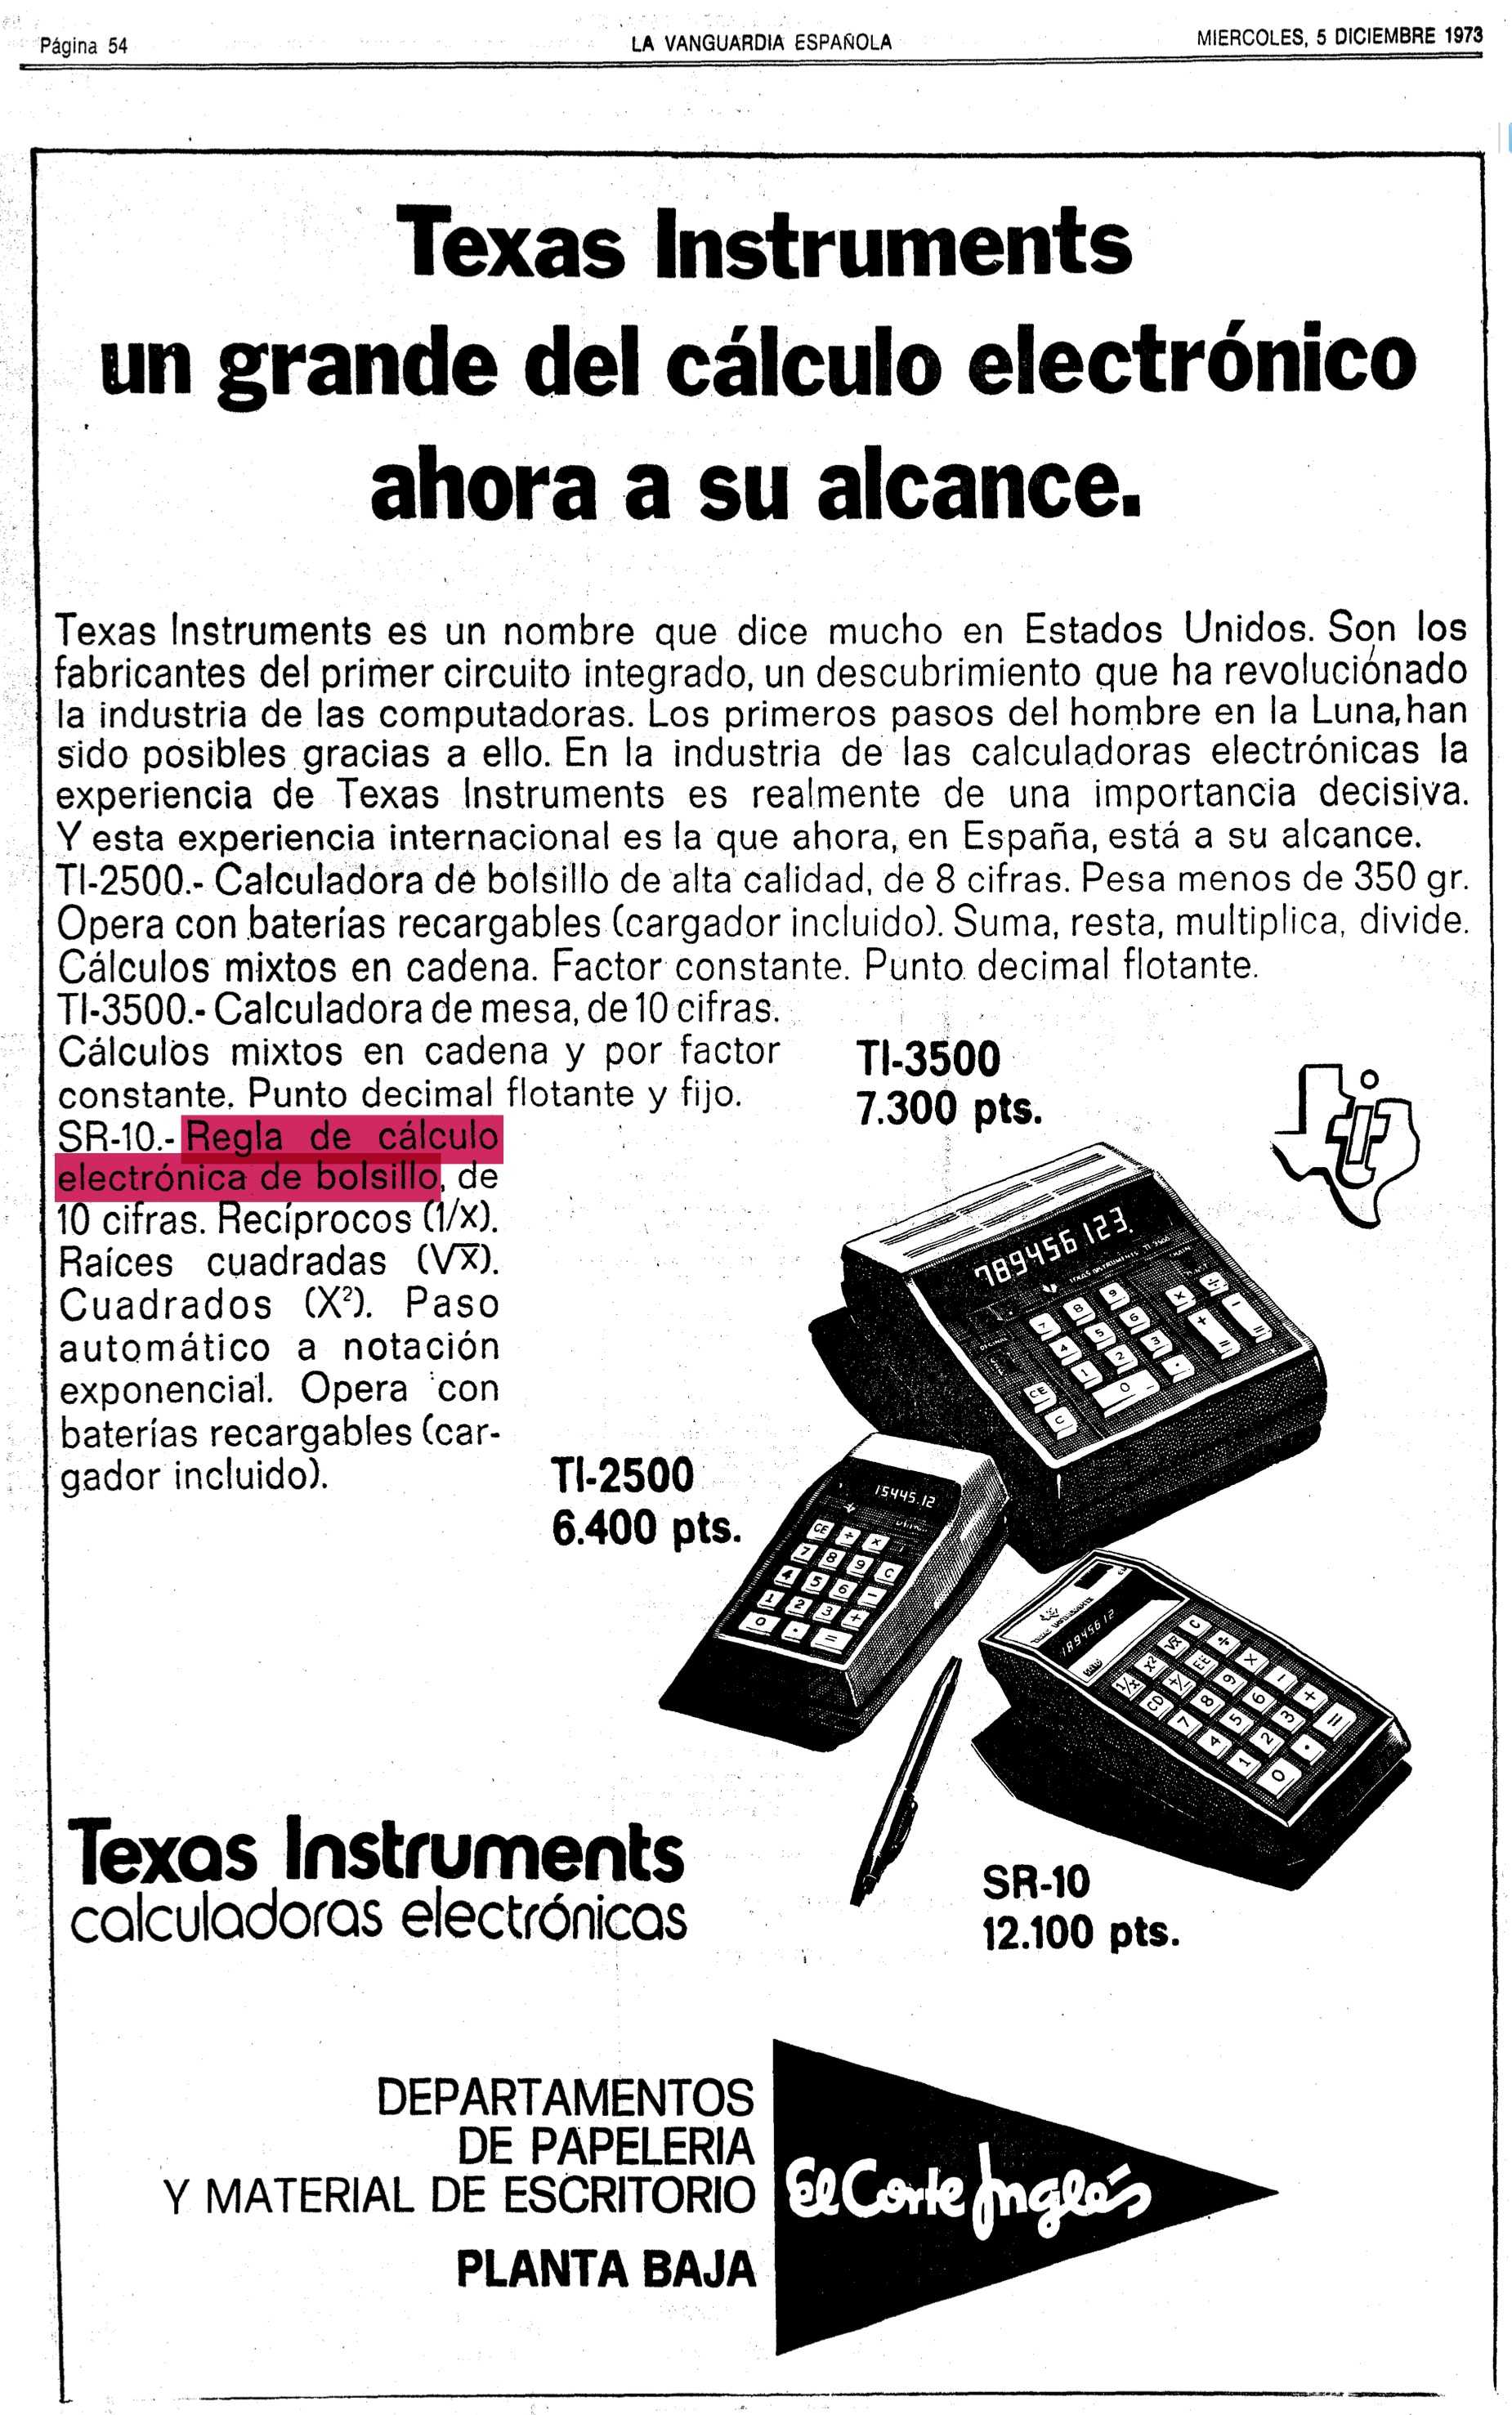 1973-12-05_Texas_instruments_regla